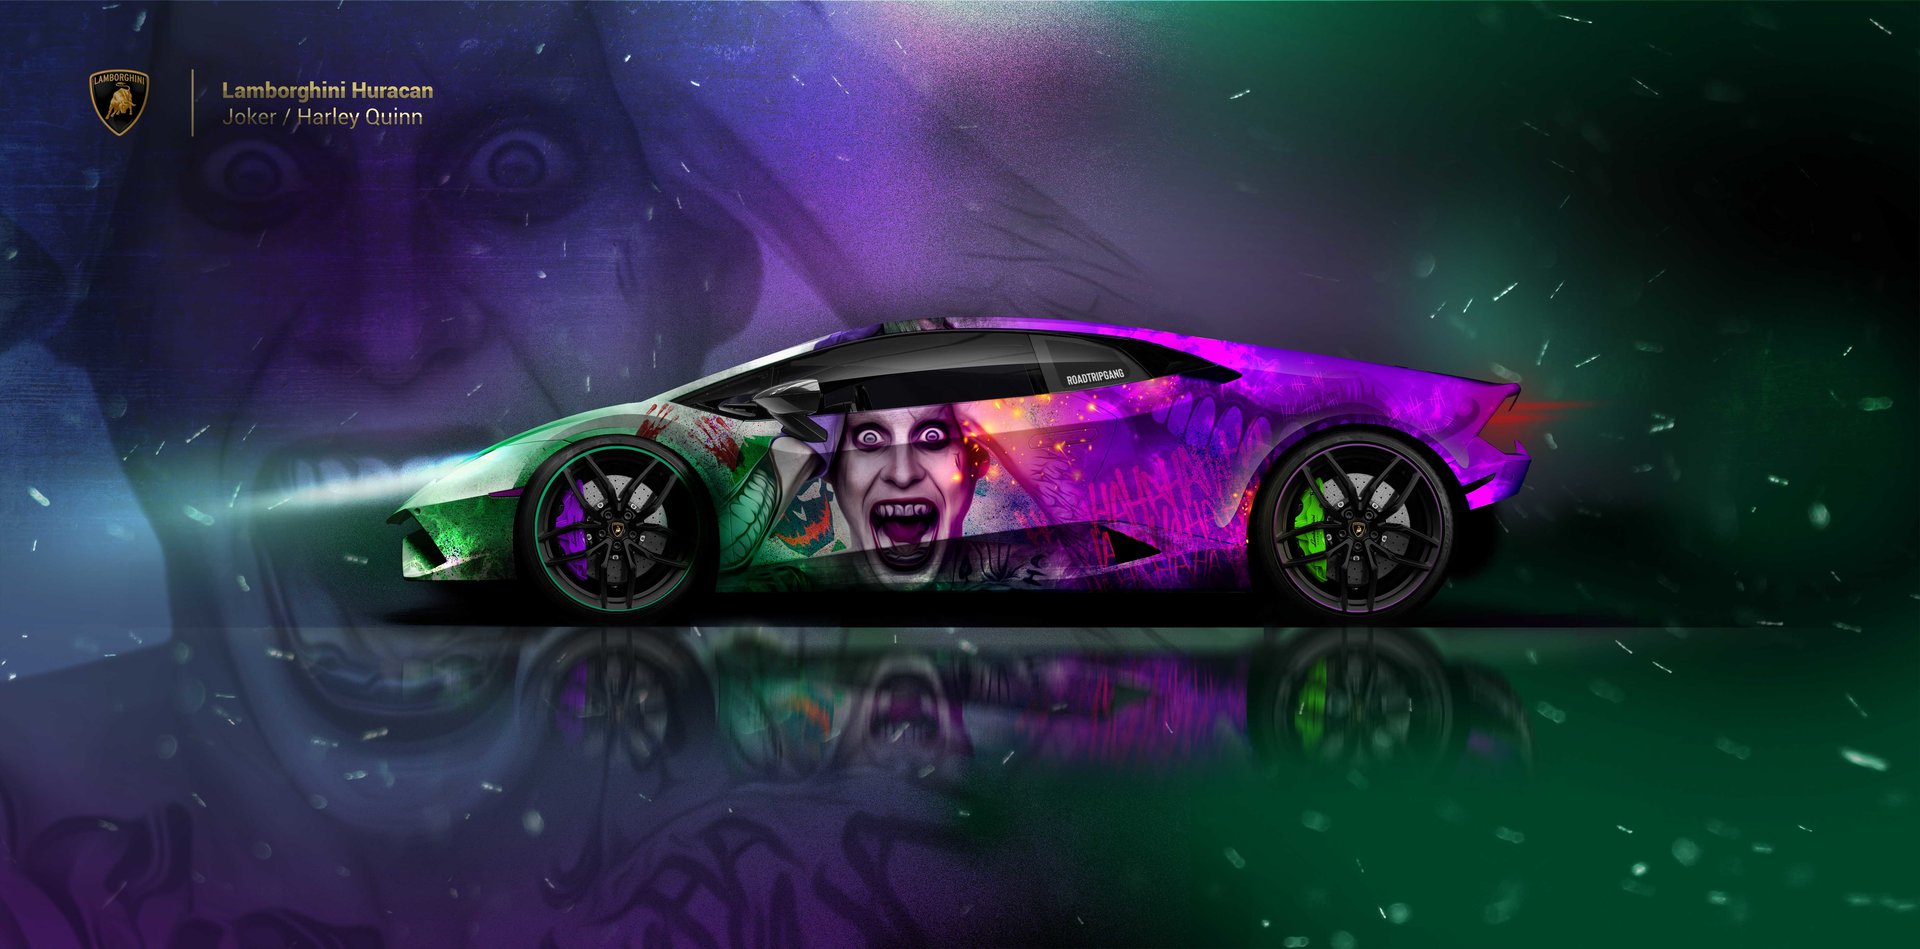 Lamborghini Huracan - Joker design | WrapStyle